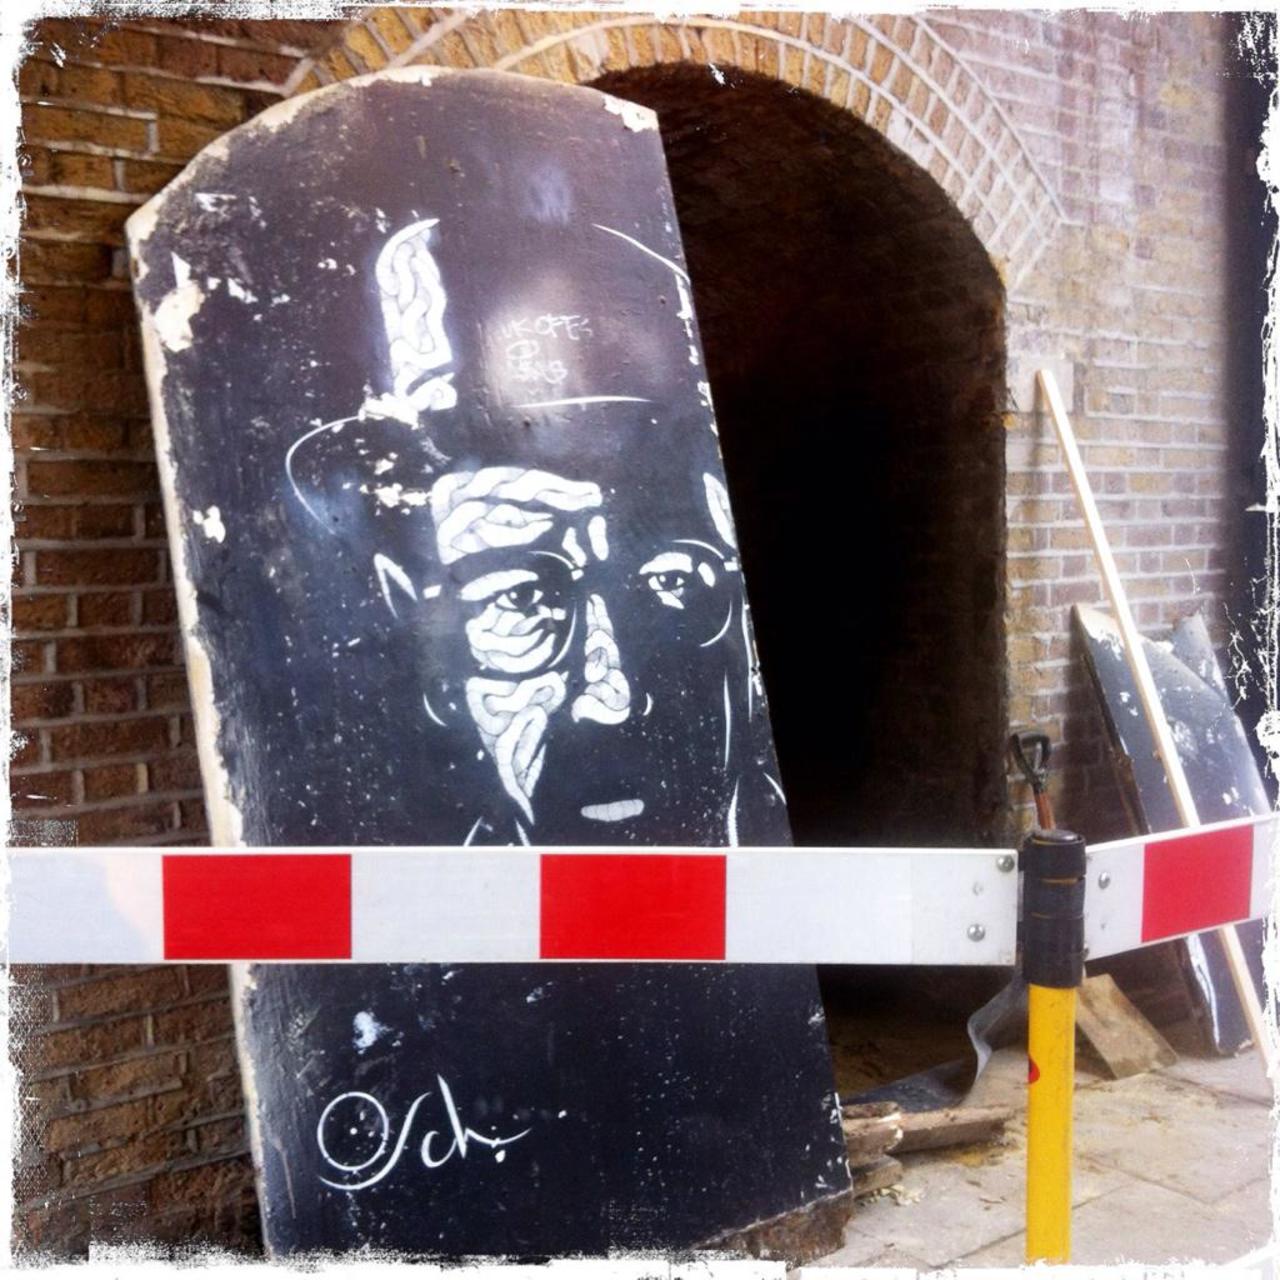 Dismantled work by @OttoSchade on Old Street #art #streetart #graffiti http://t.co/wGVFu8pjfV